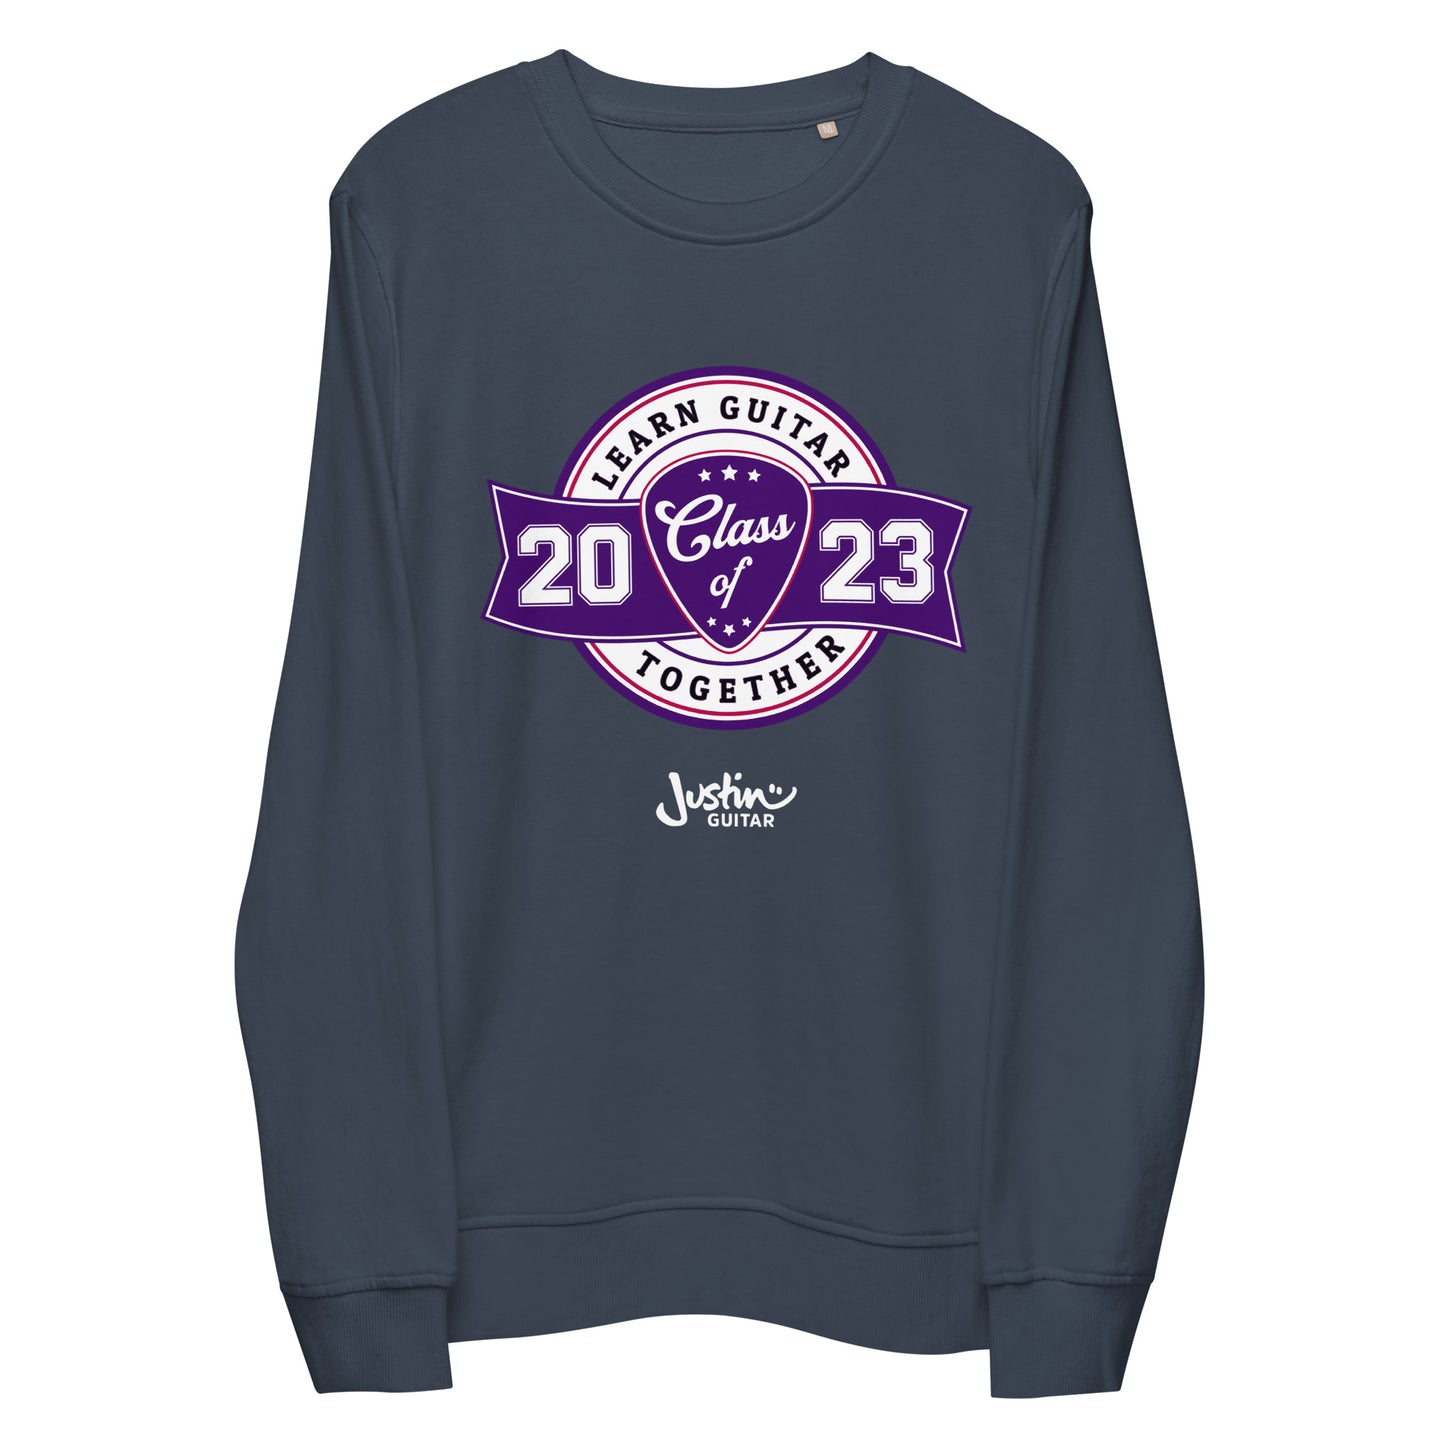 Class of 2023 | Unisex Organic Sweatshirt